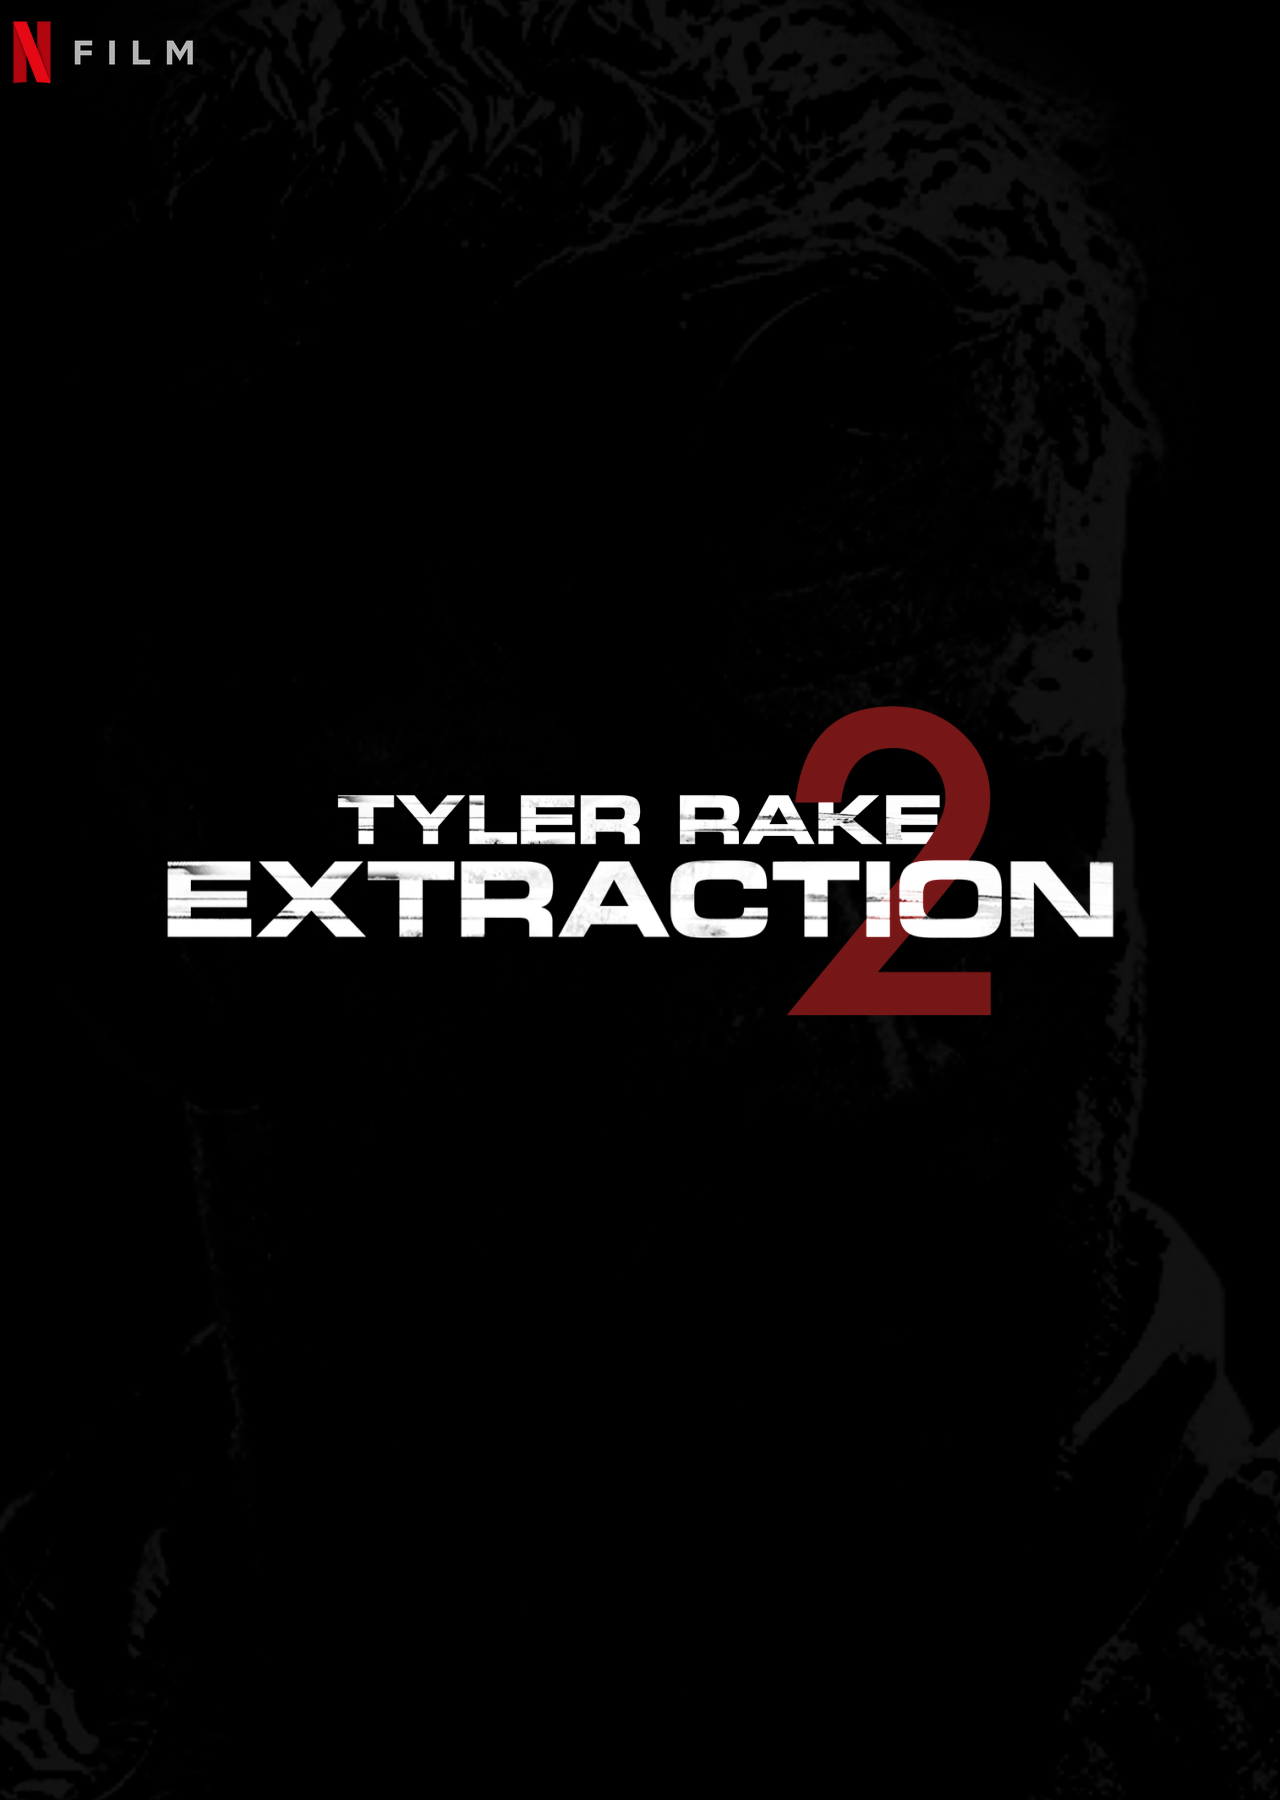 Extraction 2 Netflix Poster By Macschaer On Deviantart